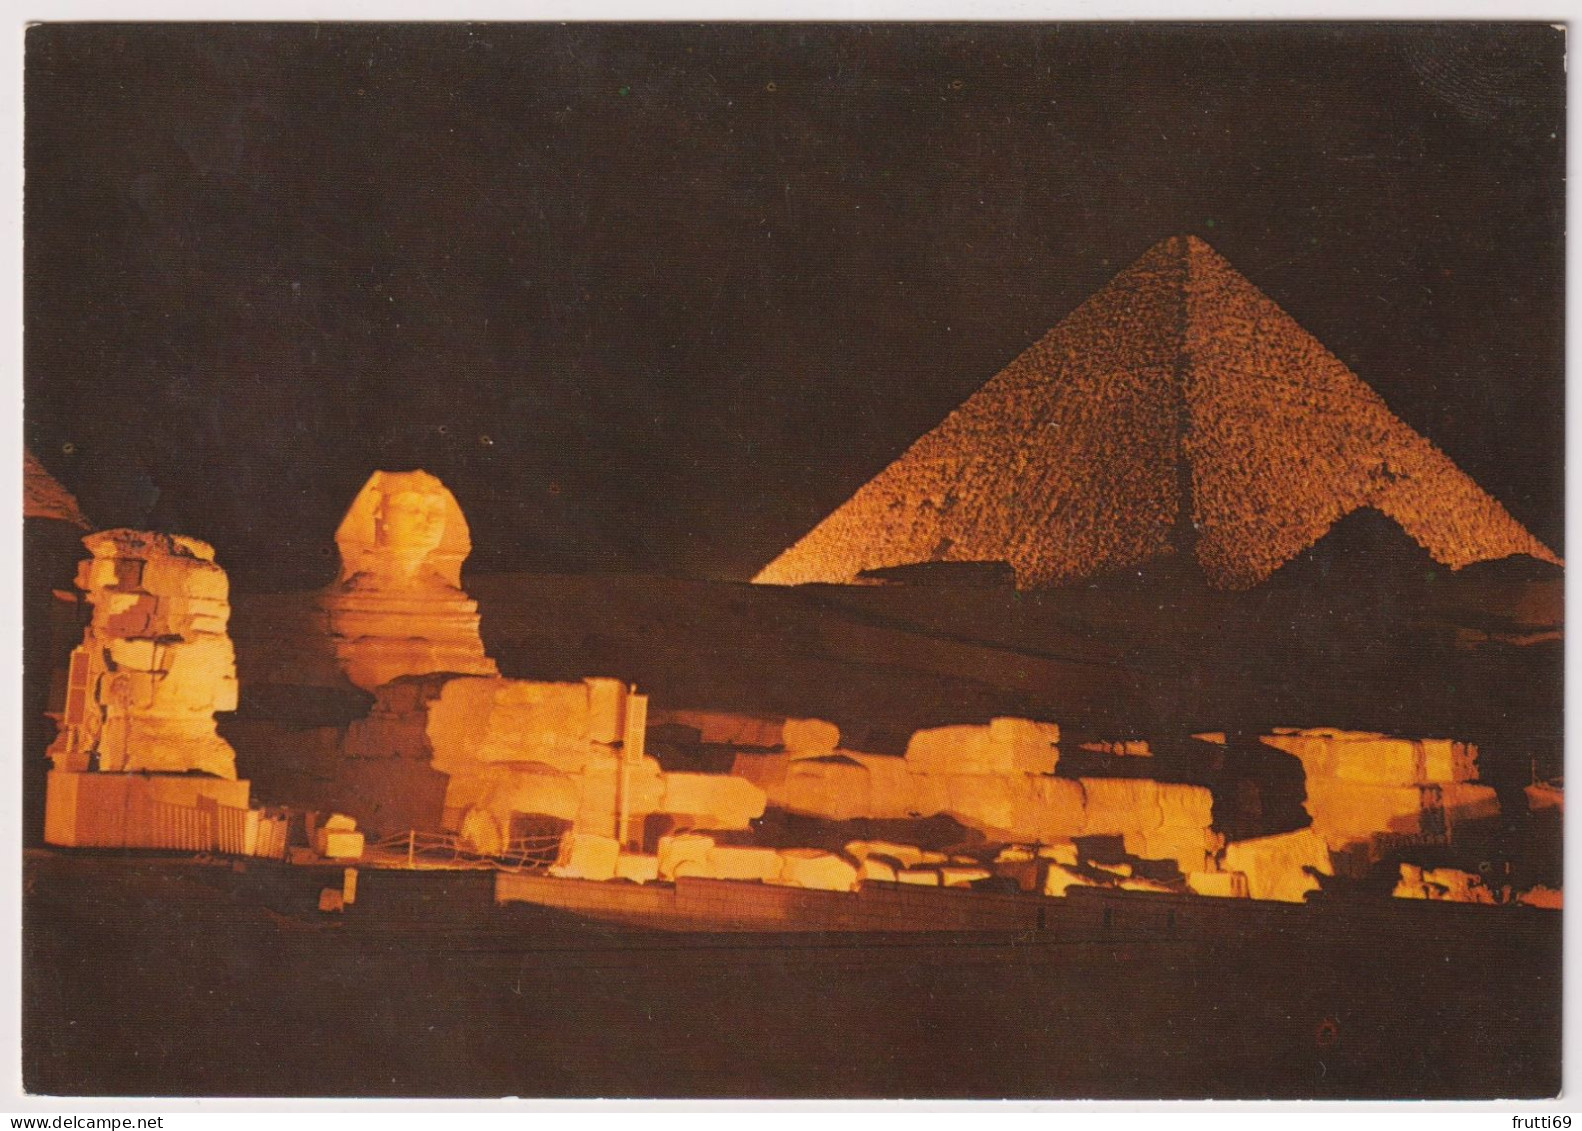 AK 198185 EGYPT - Giza - Sound And Light At The Pyramids Of Giza - Pyramiden